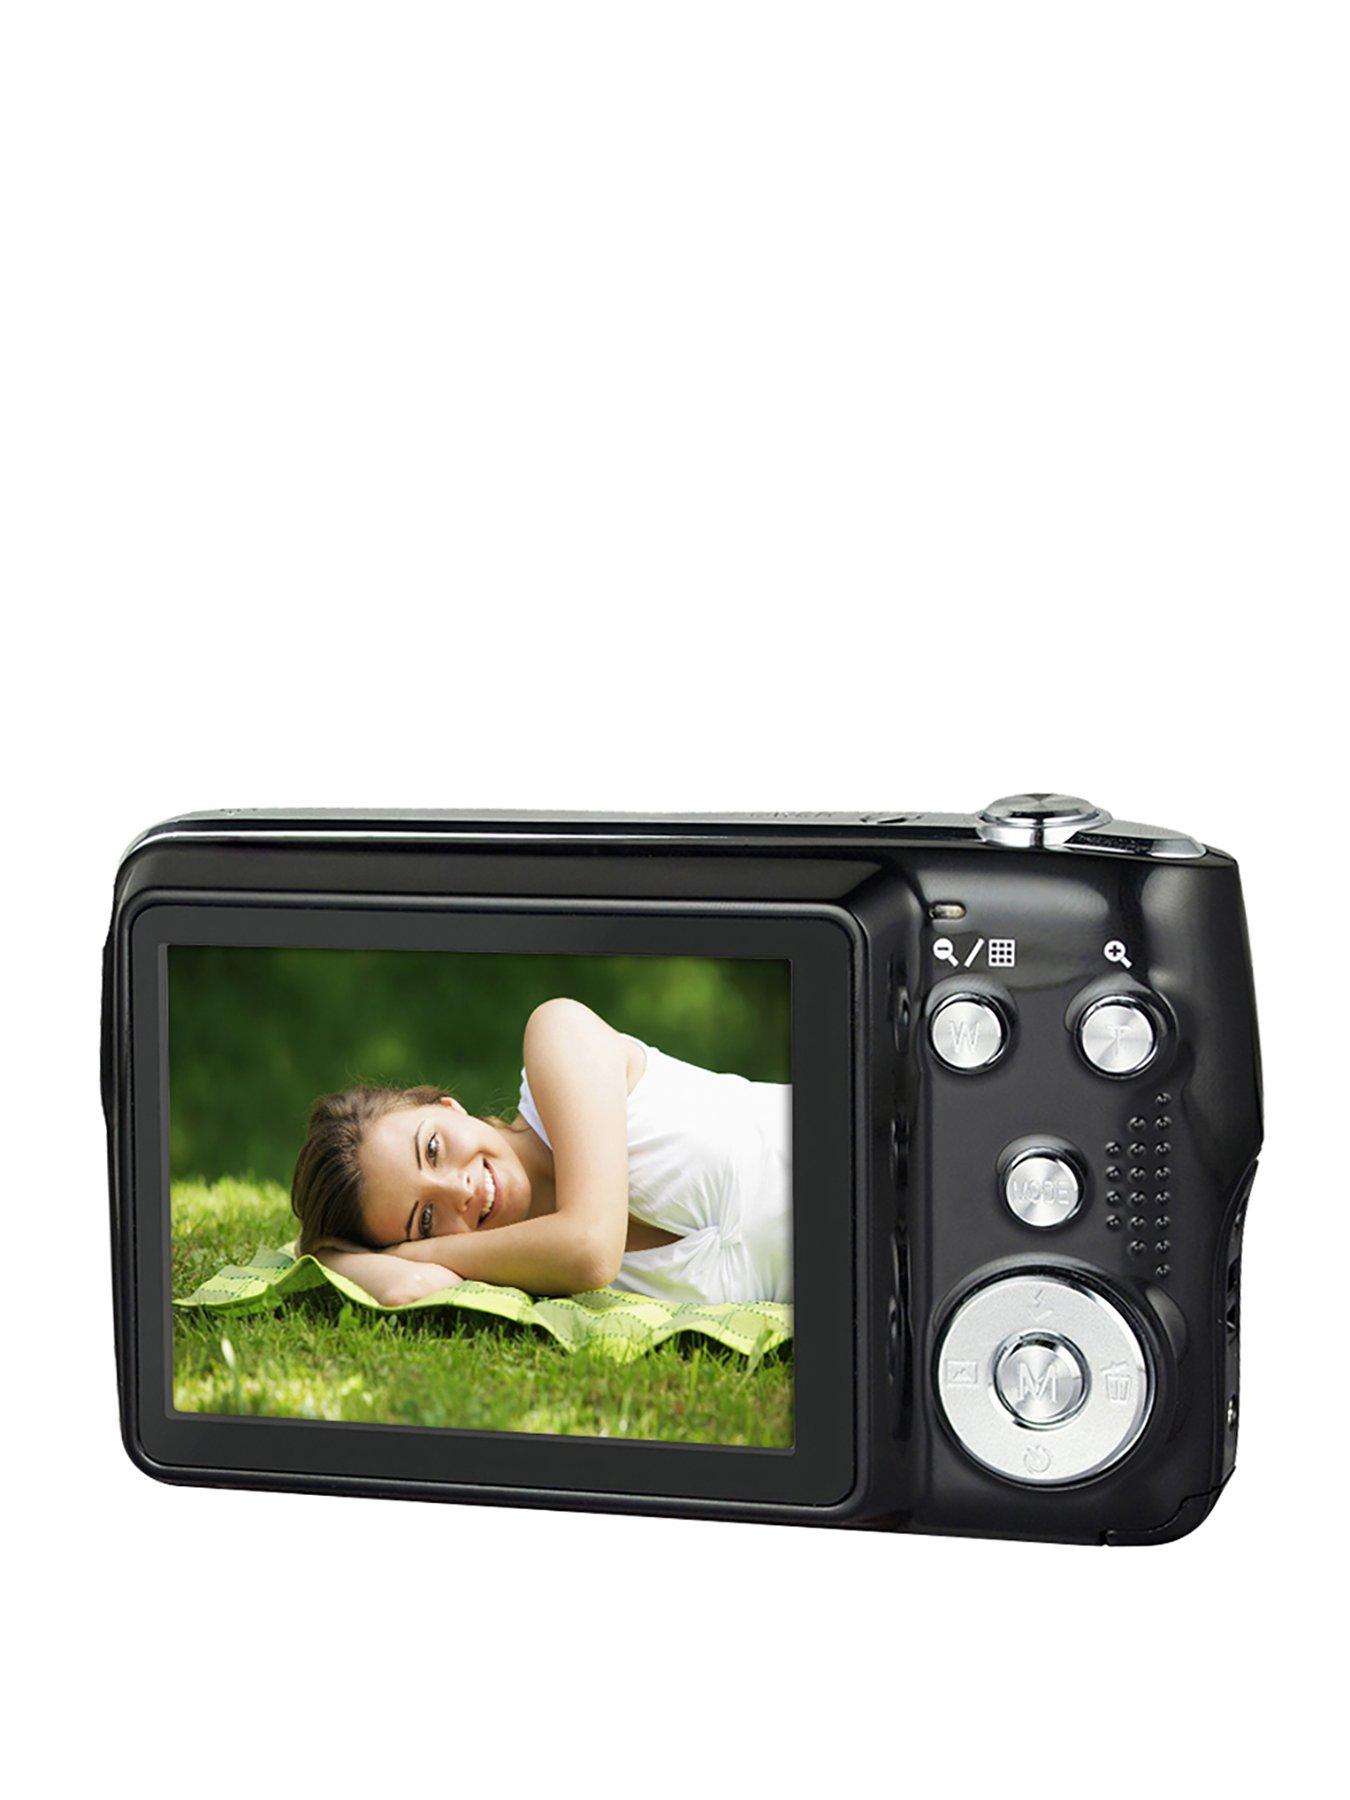 Do NOT buy this digital camera (Agfaphoto DC8200) - Amateur